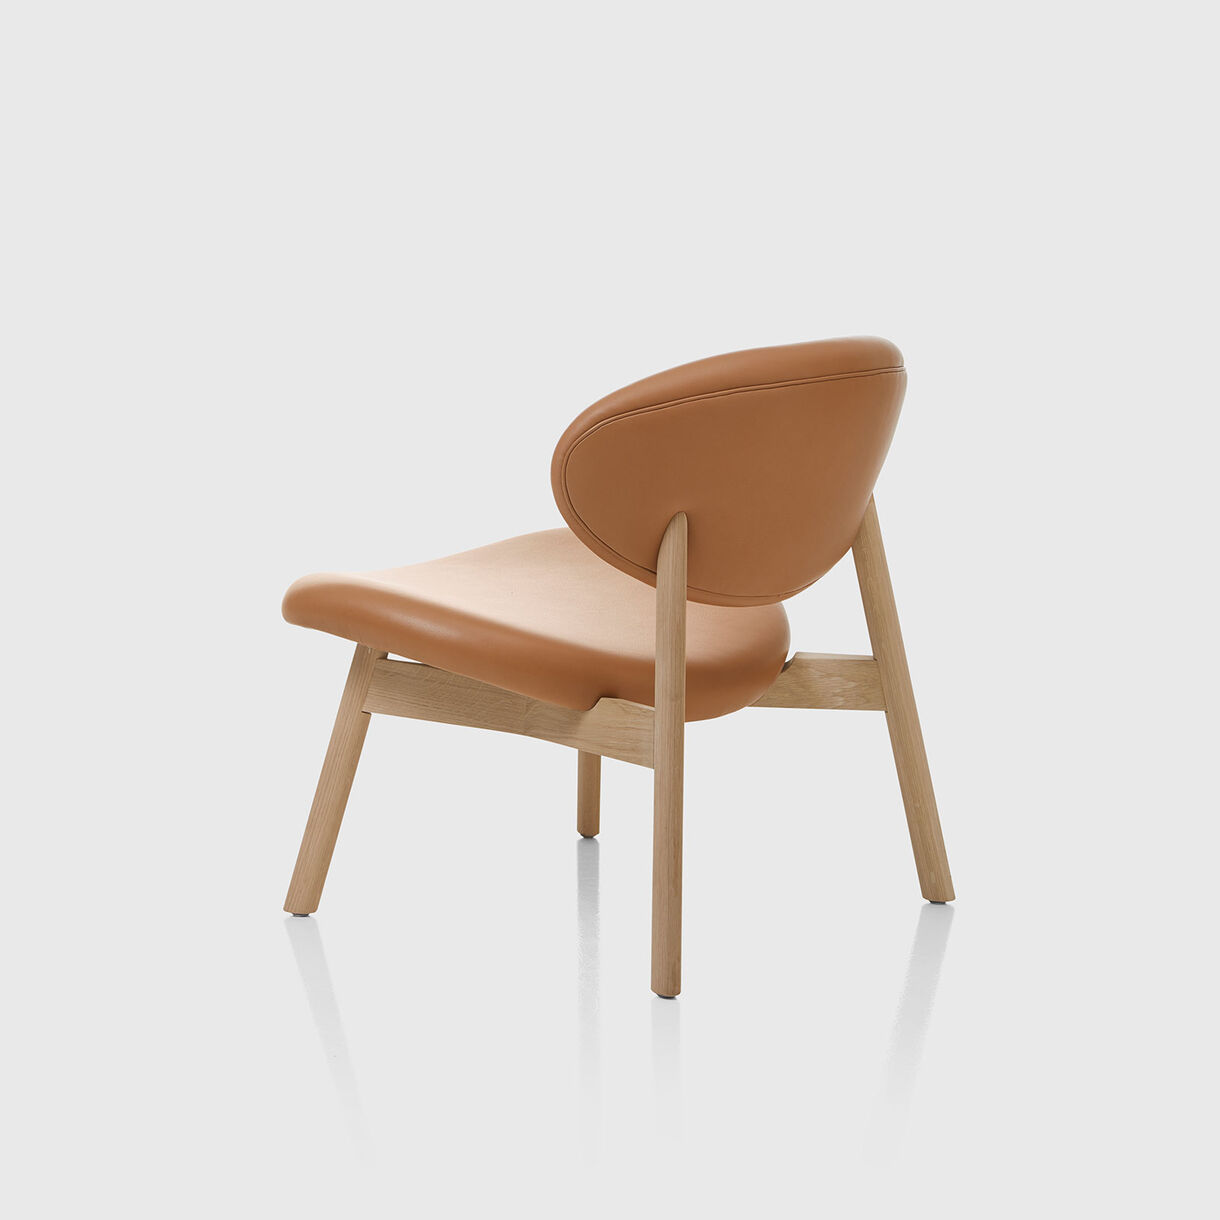 Ovoid Lounge Chair